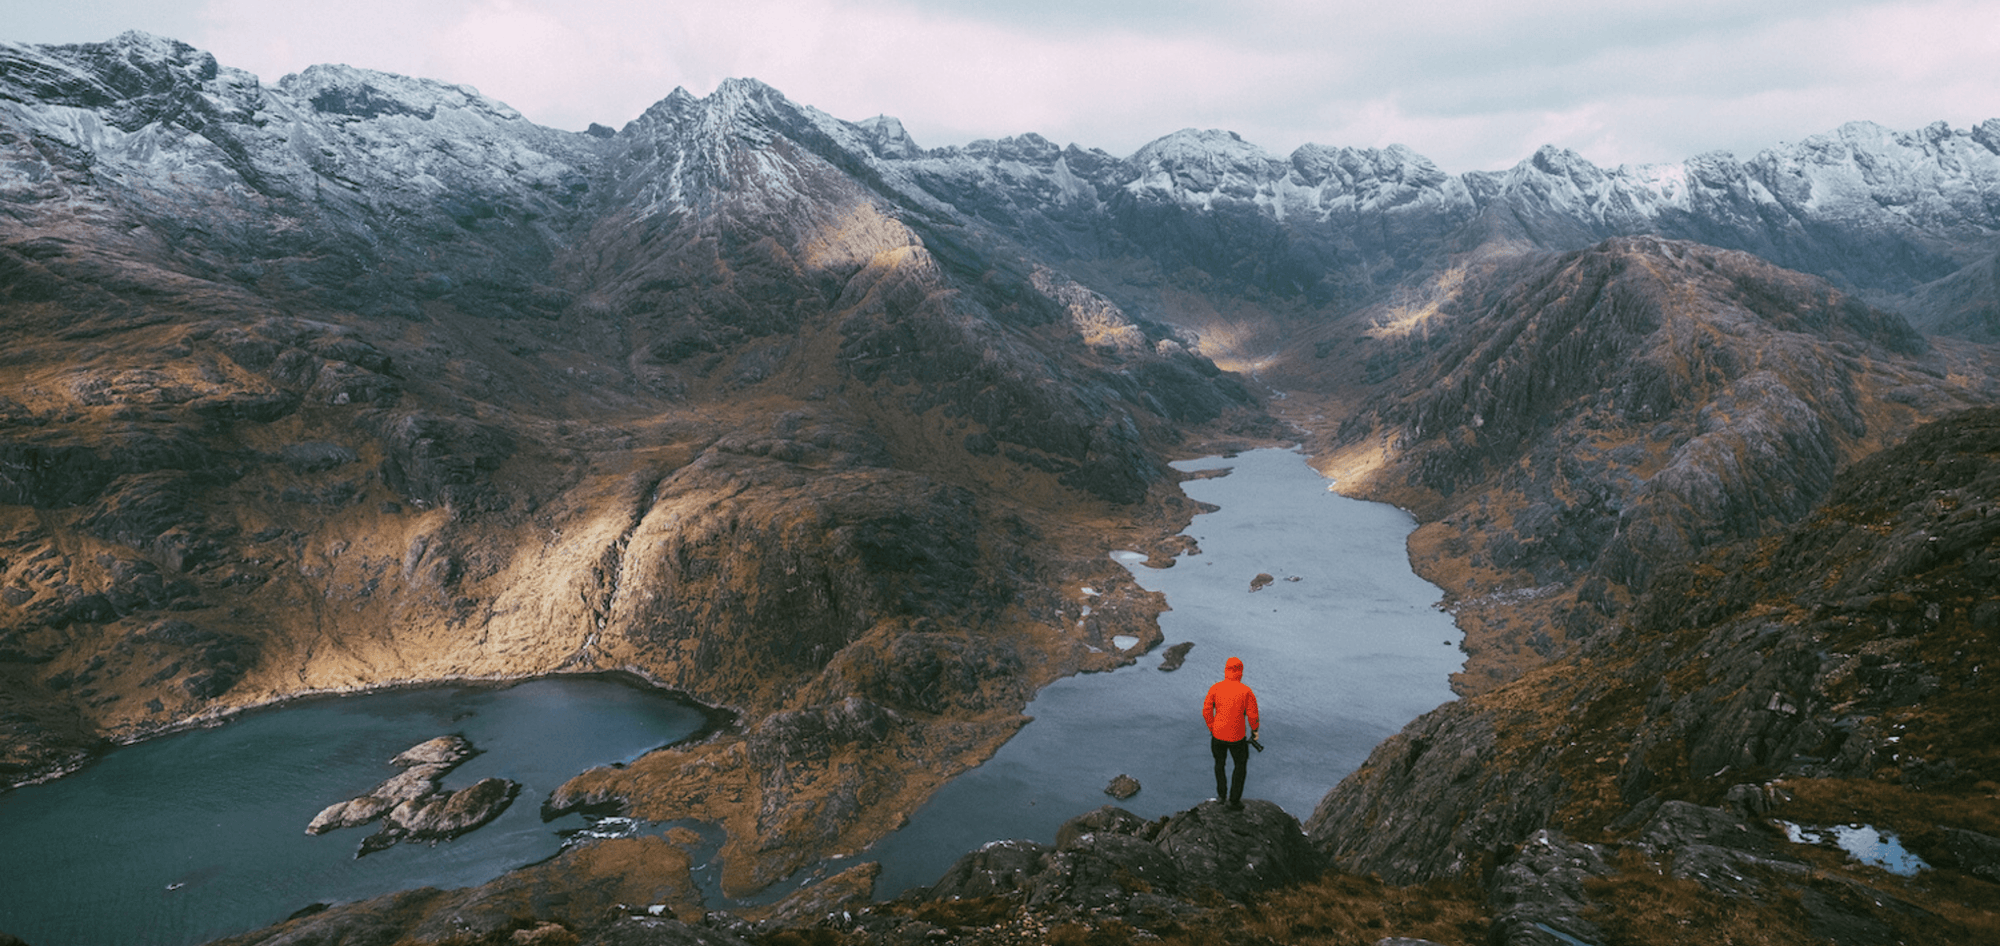 A photography journey through the Isle of Skye, Scotland